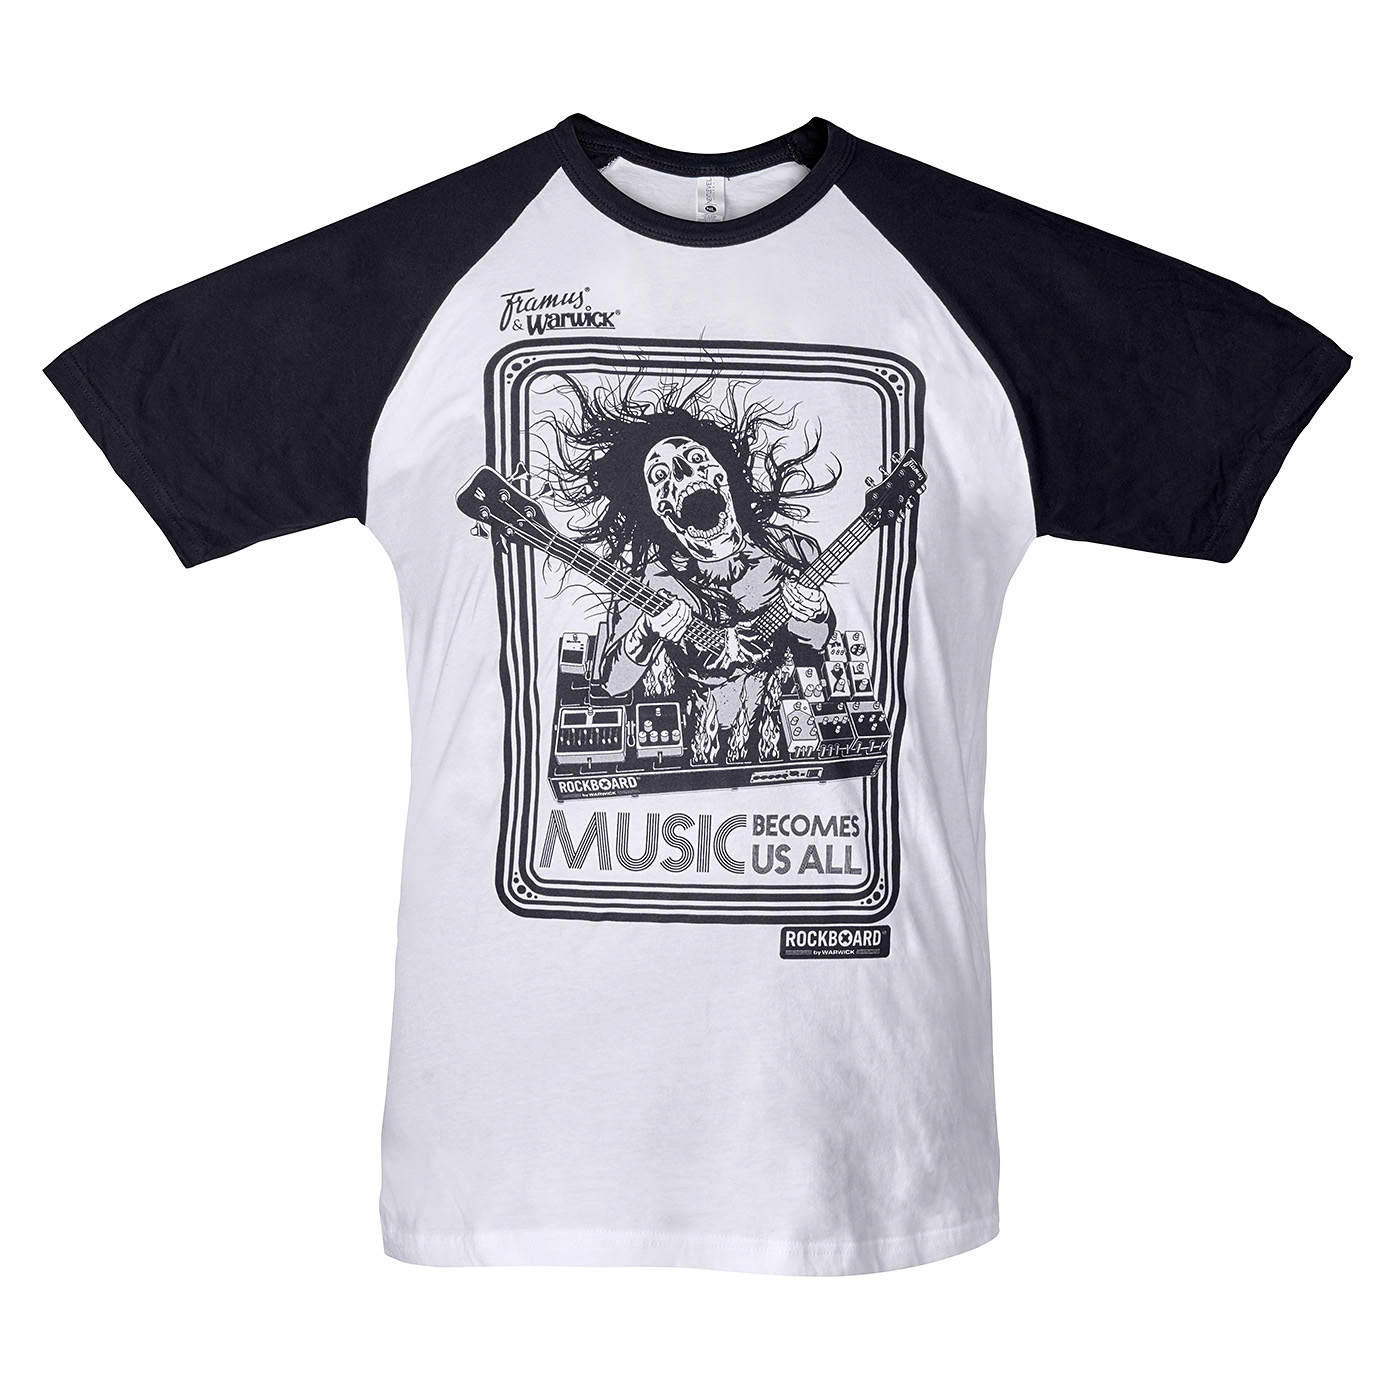 RockBoard Promo - Screamer Baseball T-Shirt White/Black - Size XL